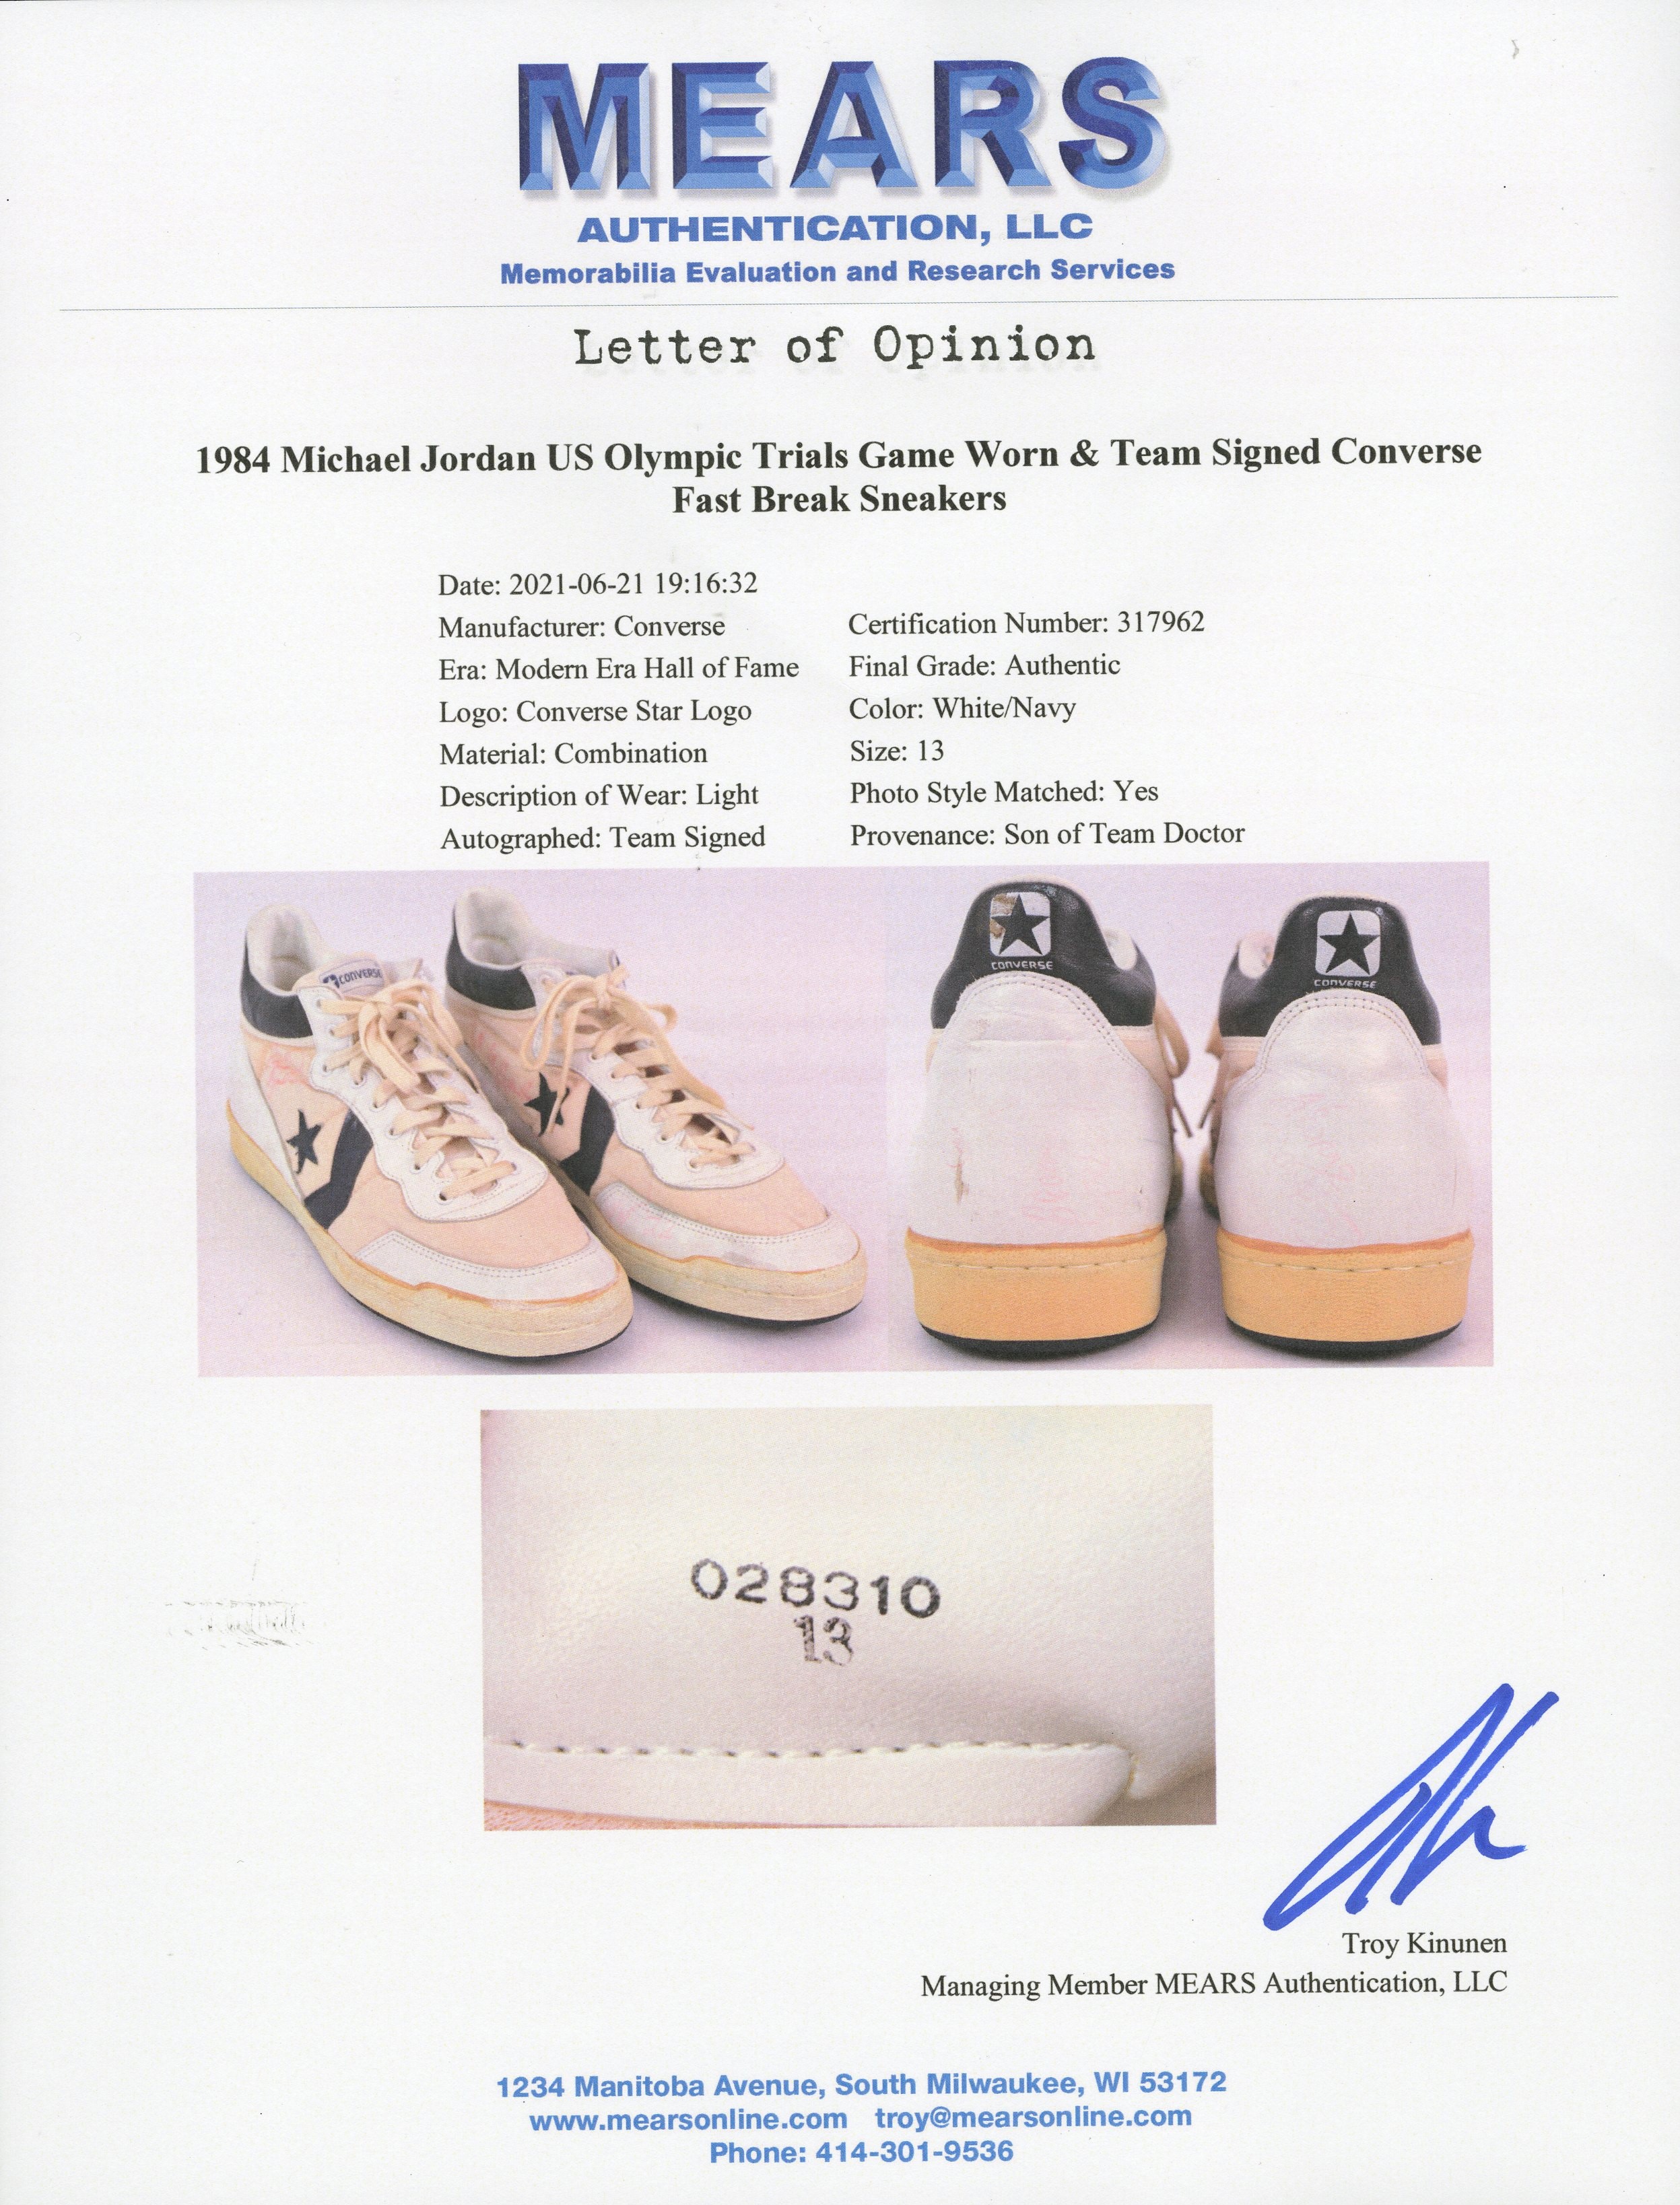 Michael Jordan in the 1984 Olympics wearing Converse shoes : r/OldSchoolCool